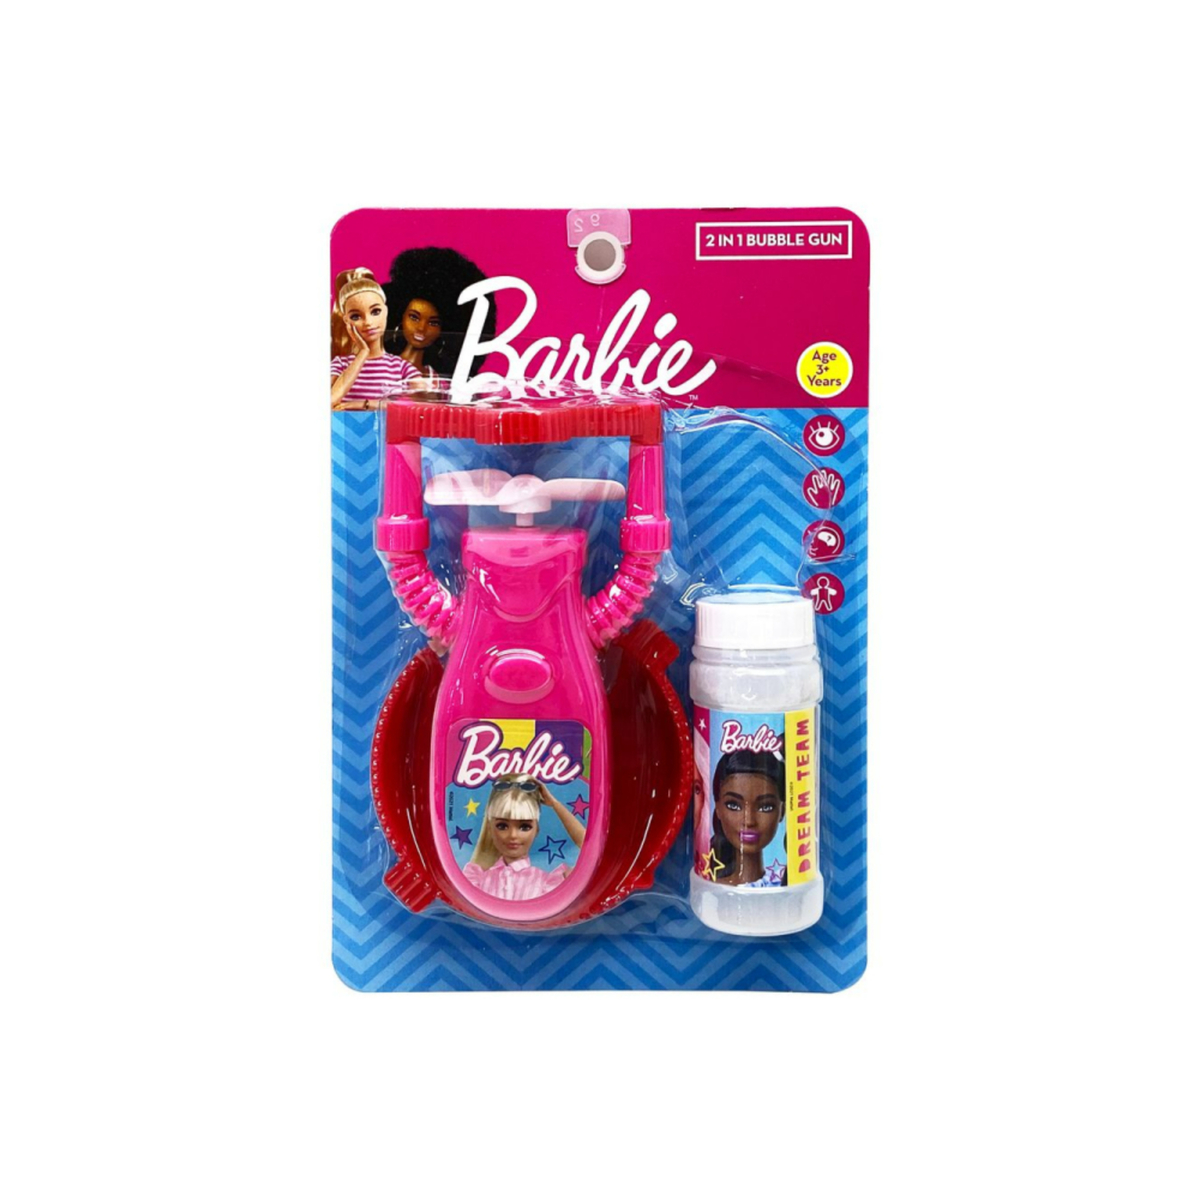 Barbie 2 in 1 Bubble Gun, MAT10